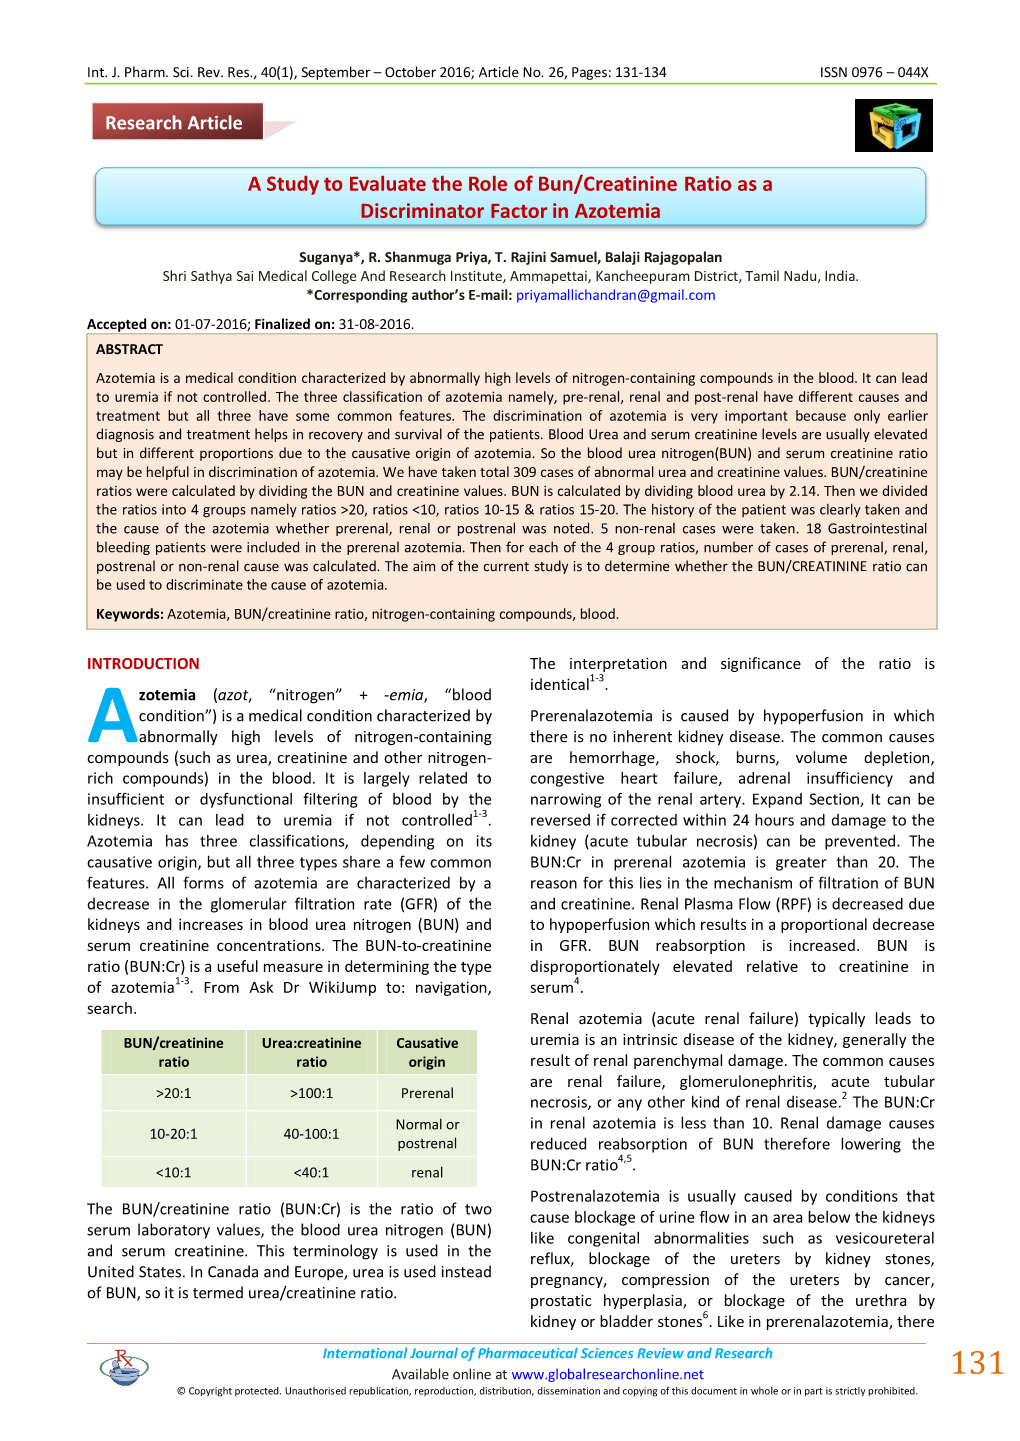 A Study to Evaluate the Role of Bun/Creatinine Ratio As a Discriminator Factor in Azotemia